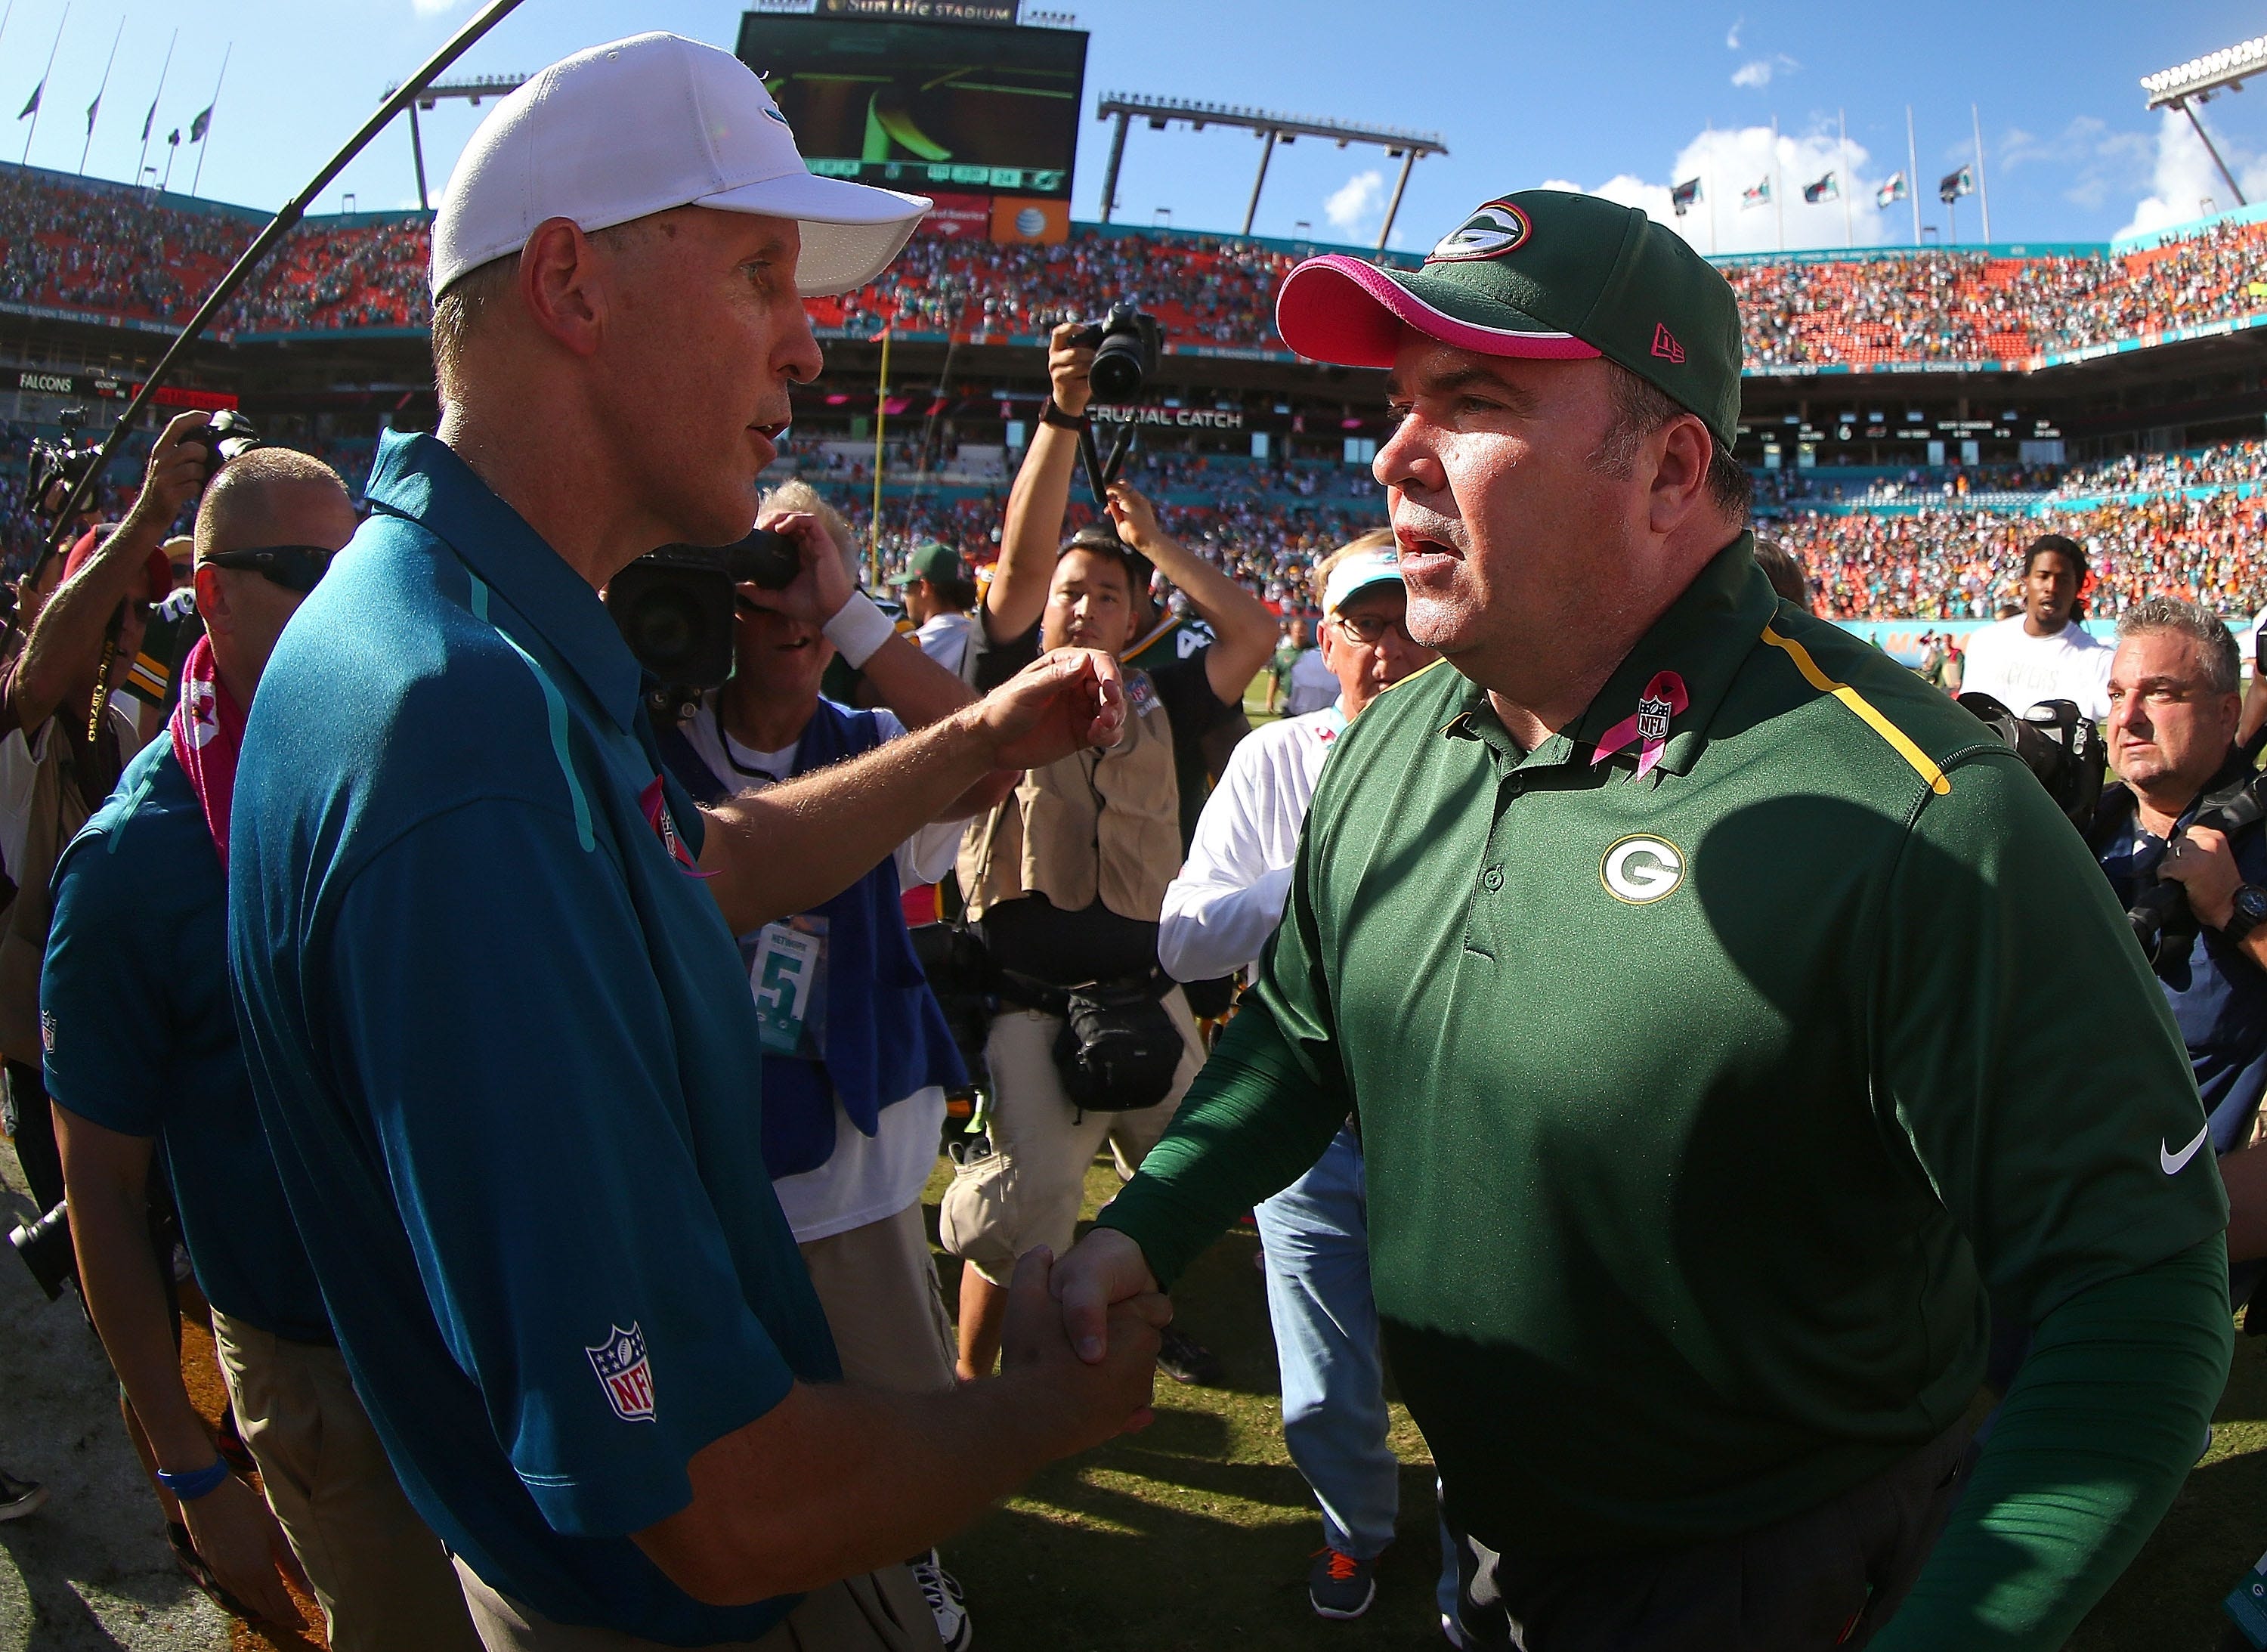 Ex-Miami Dolphins coach Joe Philbin leading Packers makes me queasy